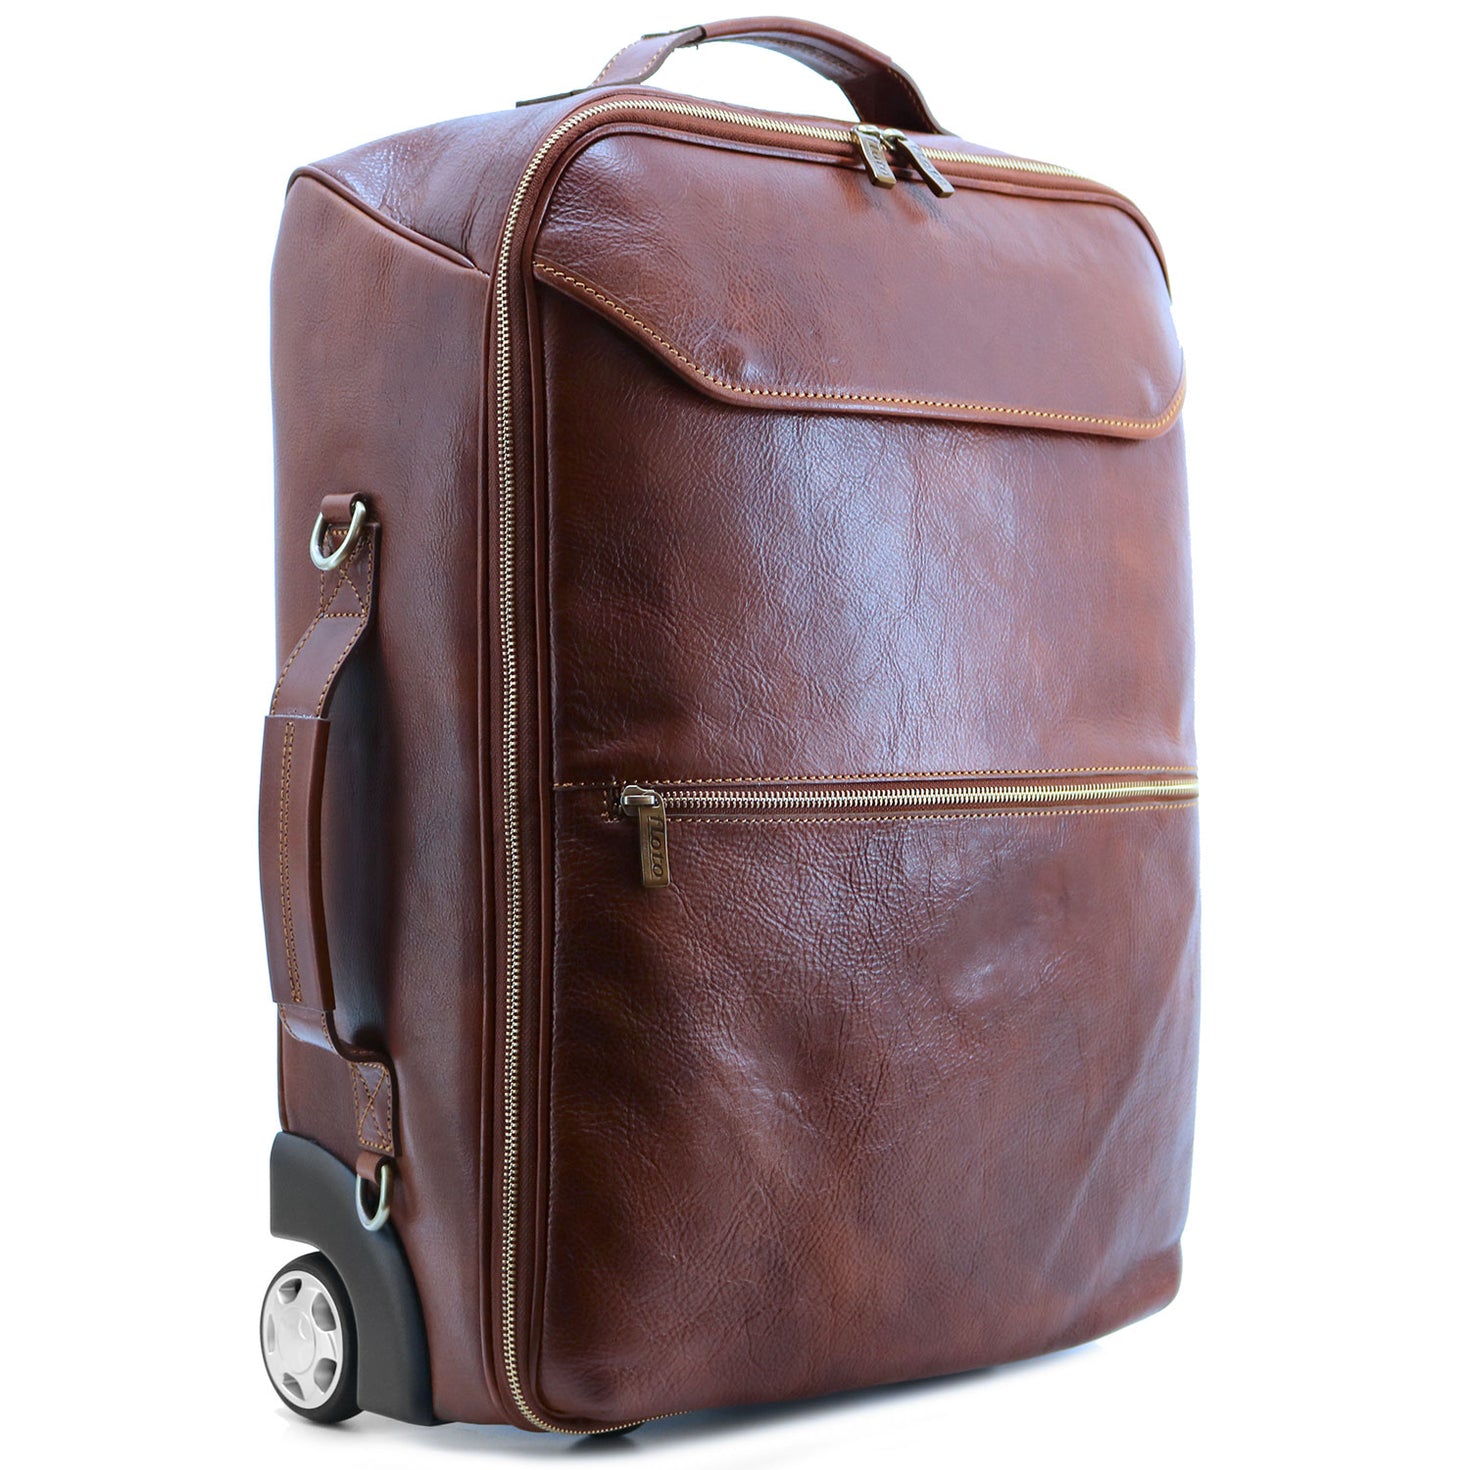 Floto Firenze Italian Leather Trolley Rolling Duffle Bag Suitcase